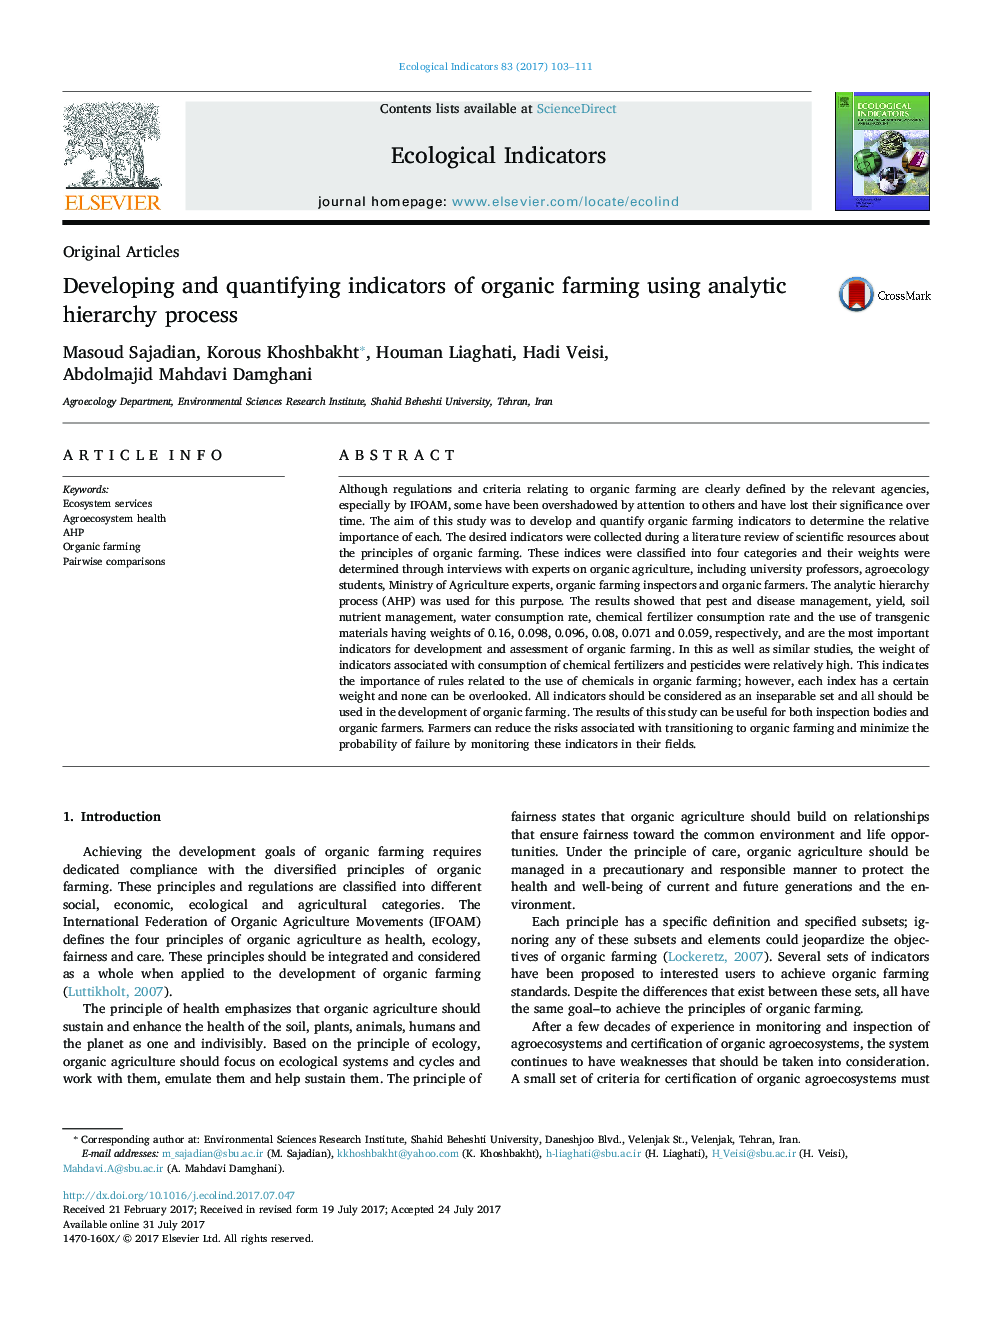 Original ArticlesDeveloping and quantifying indicators of organic farming using analytic hierarchy process